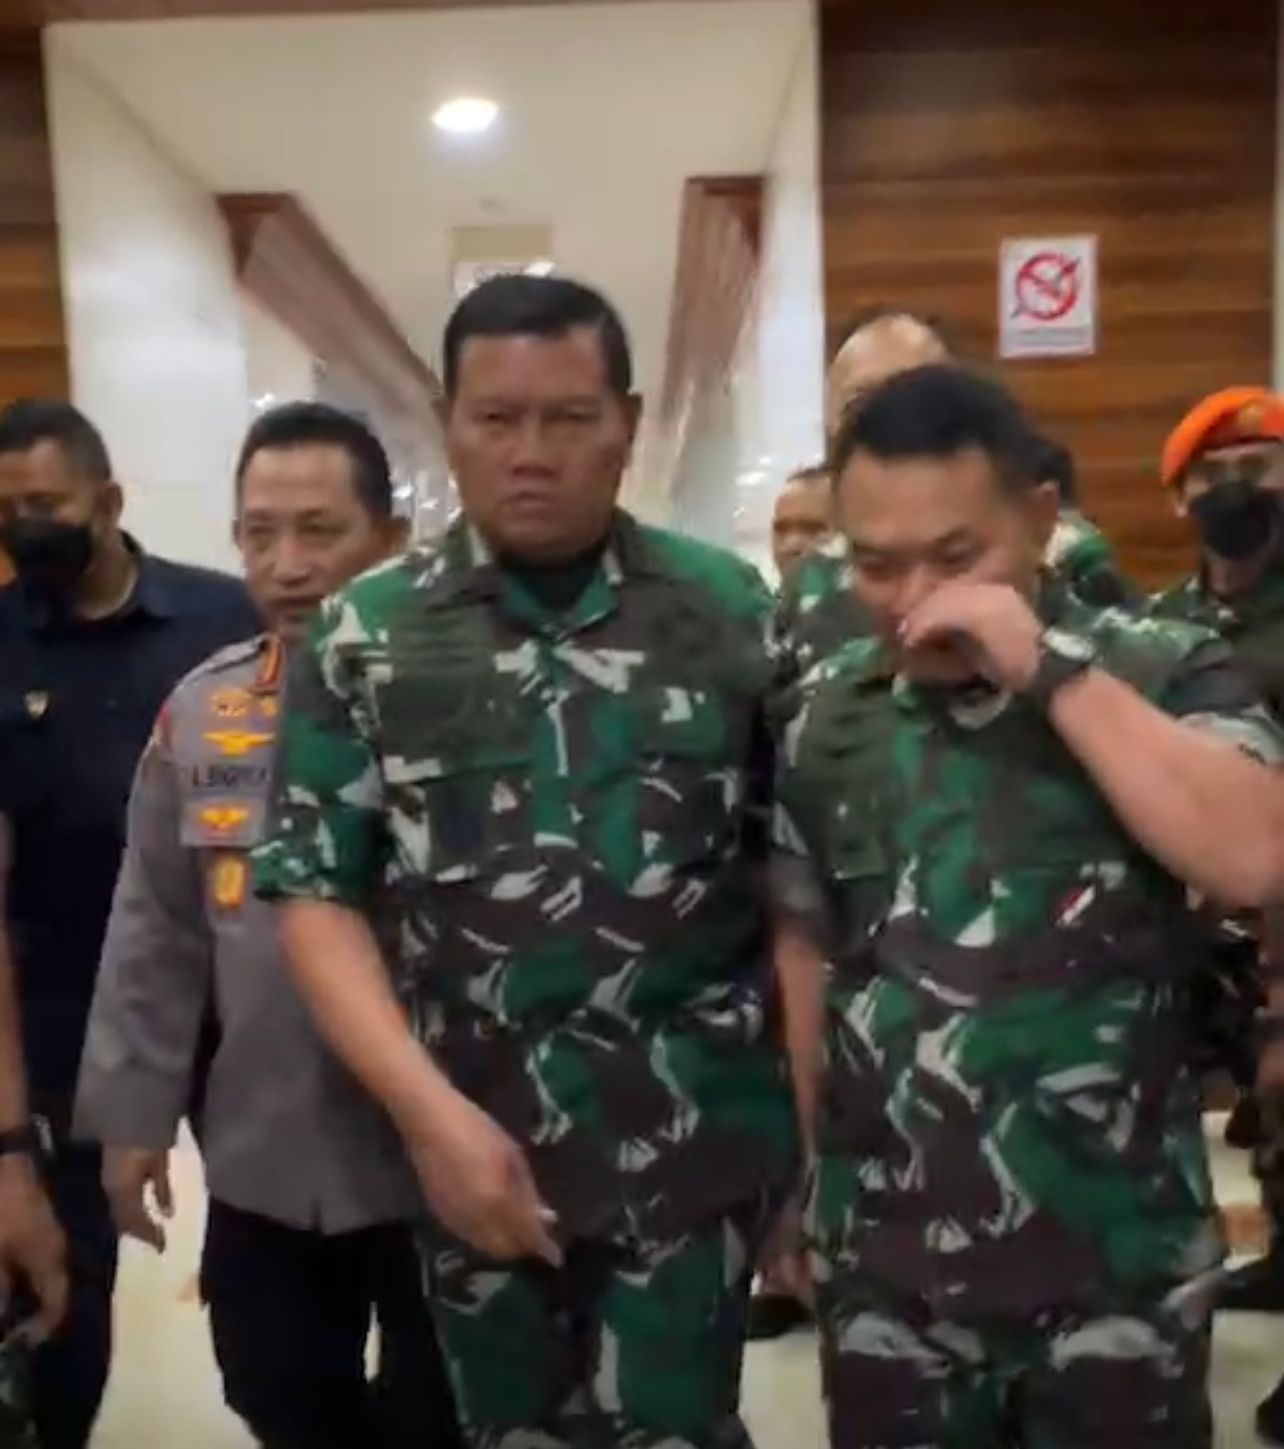 Uji kelayakan calon Panglima TNI Yudo Margono disebut hanya formalitas